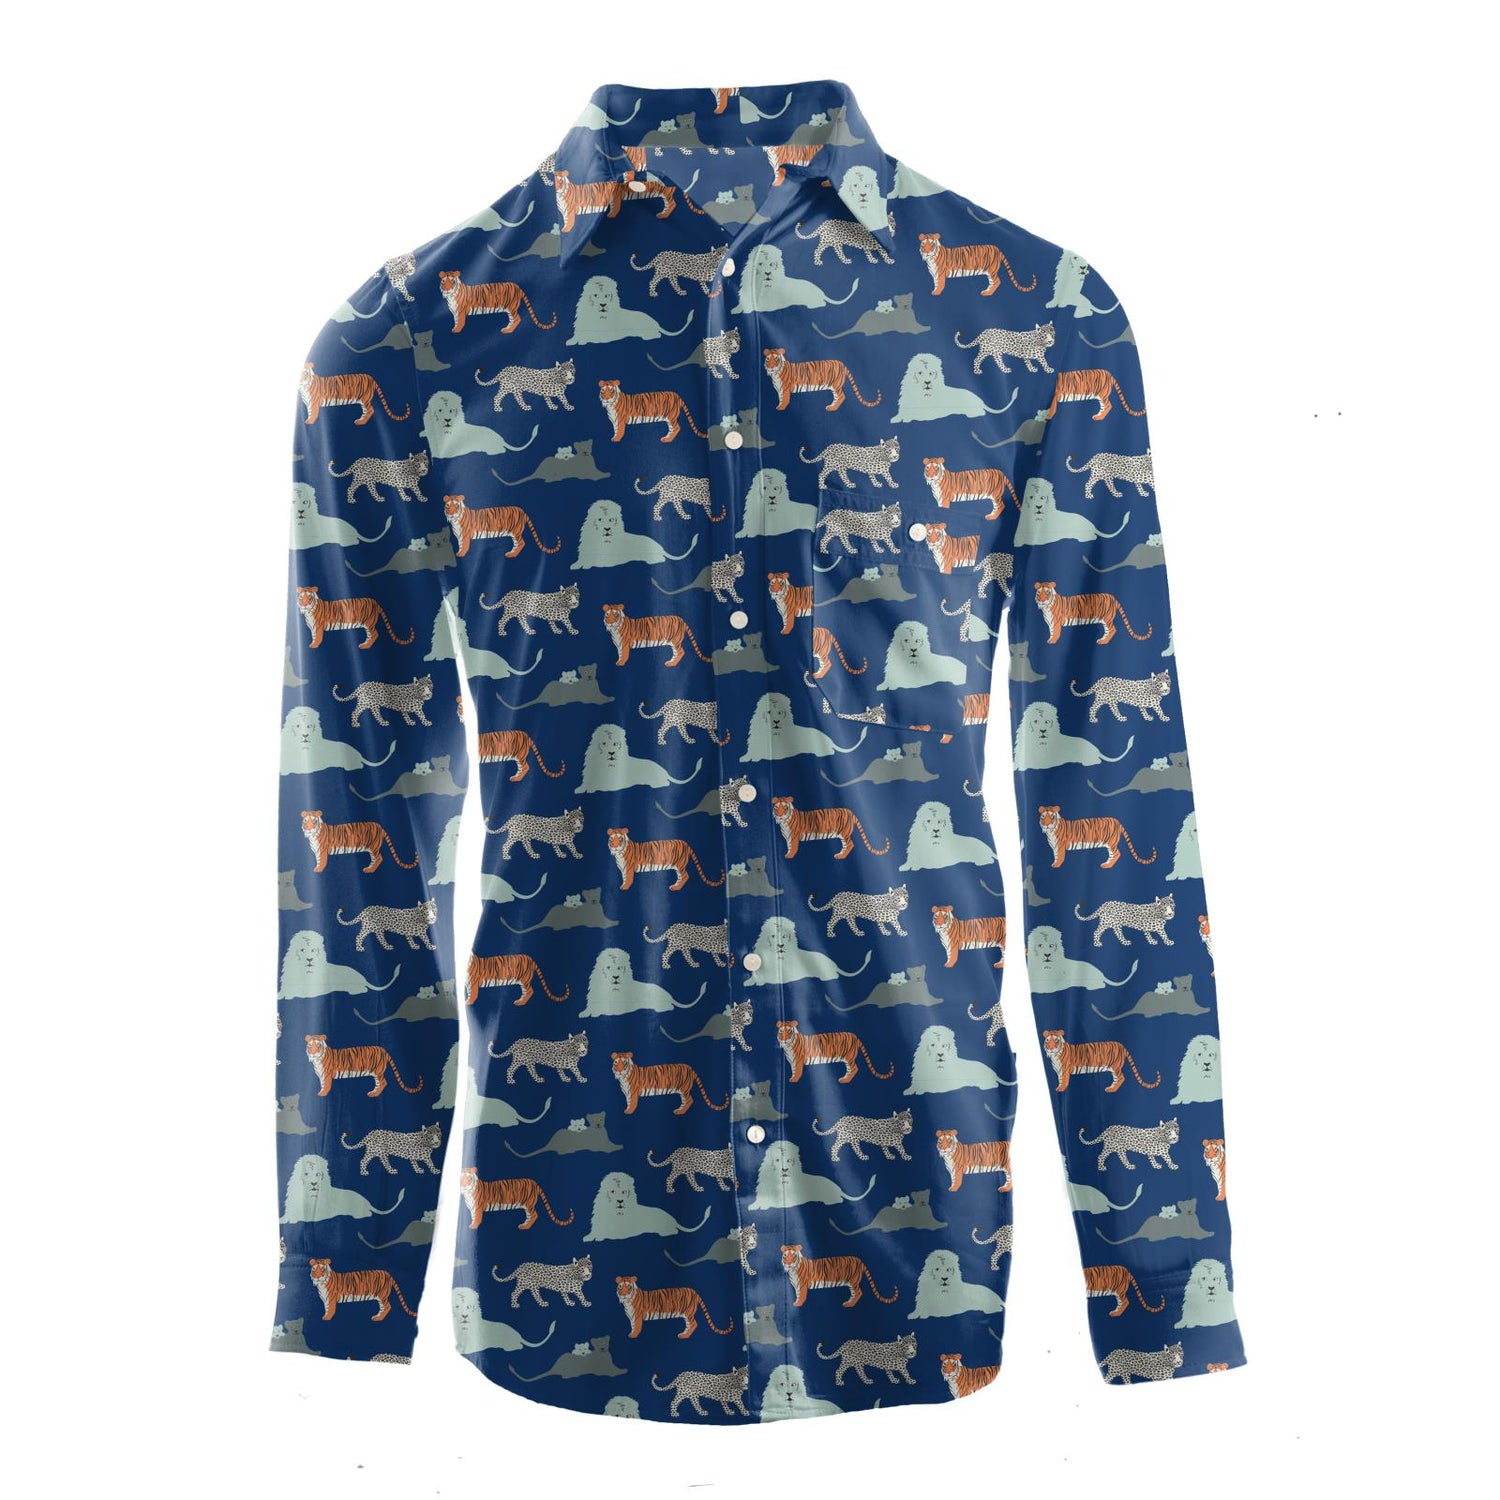 Men's Print Long Sleeve Woven Button-Down Shirt in Flag Blue Big Cats